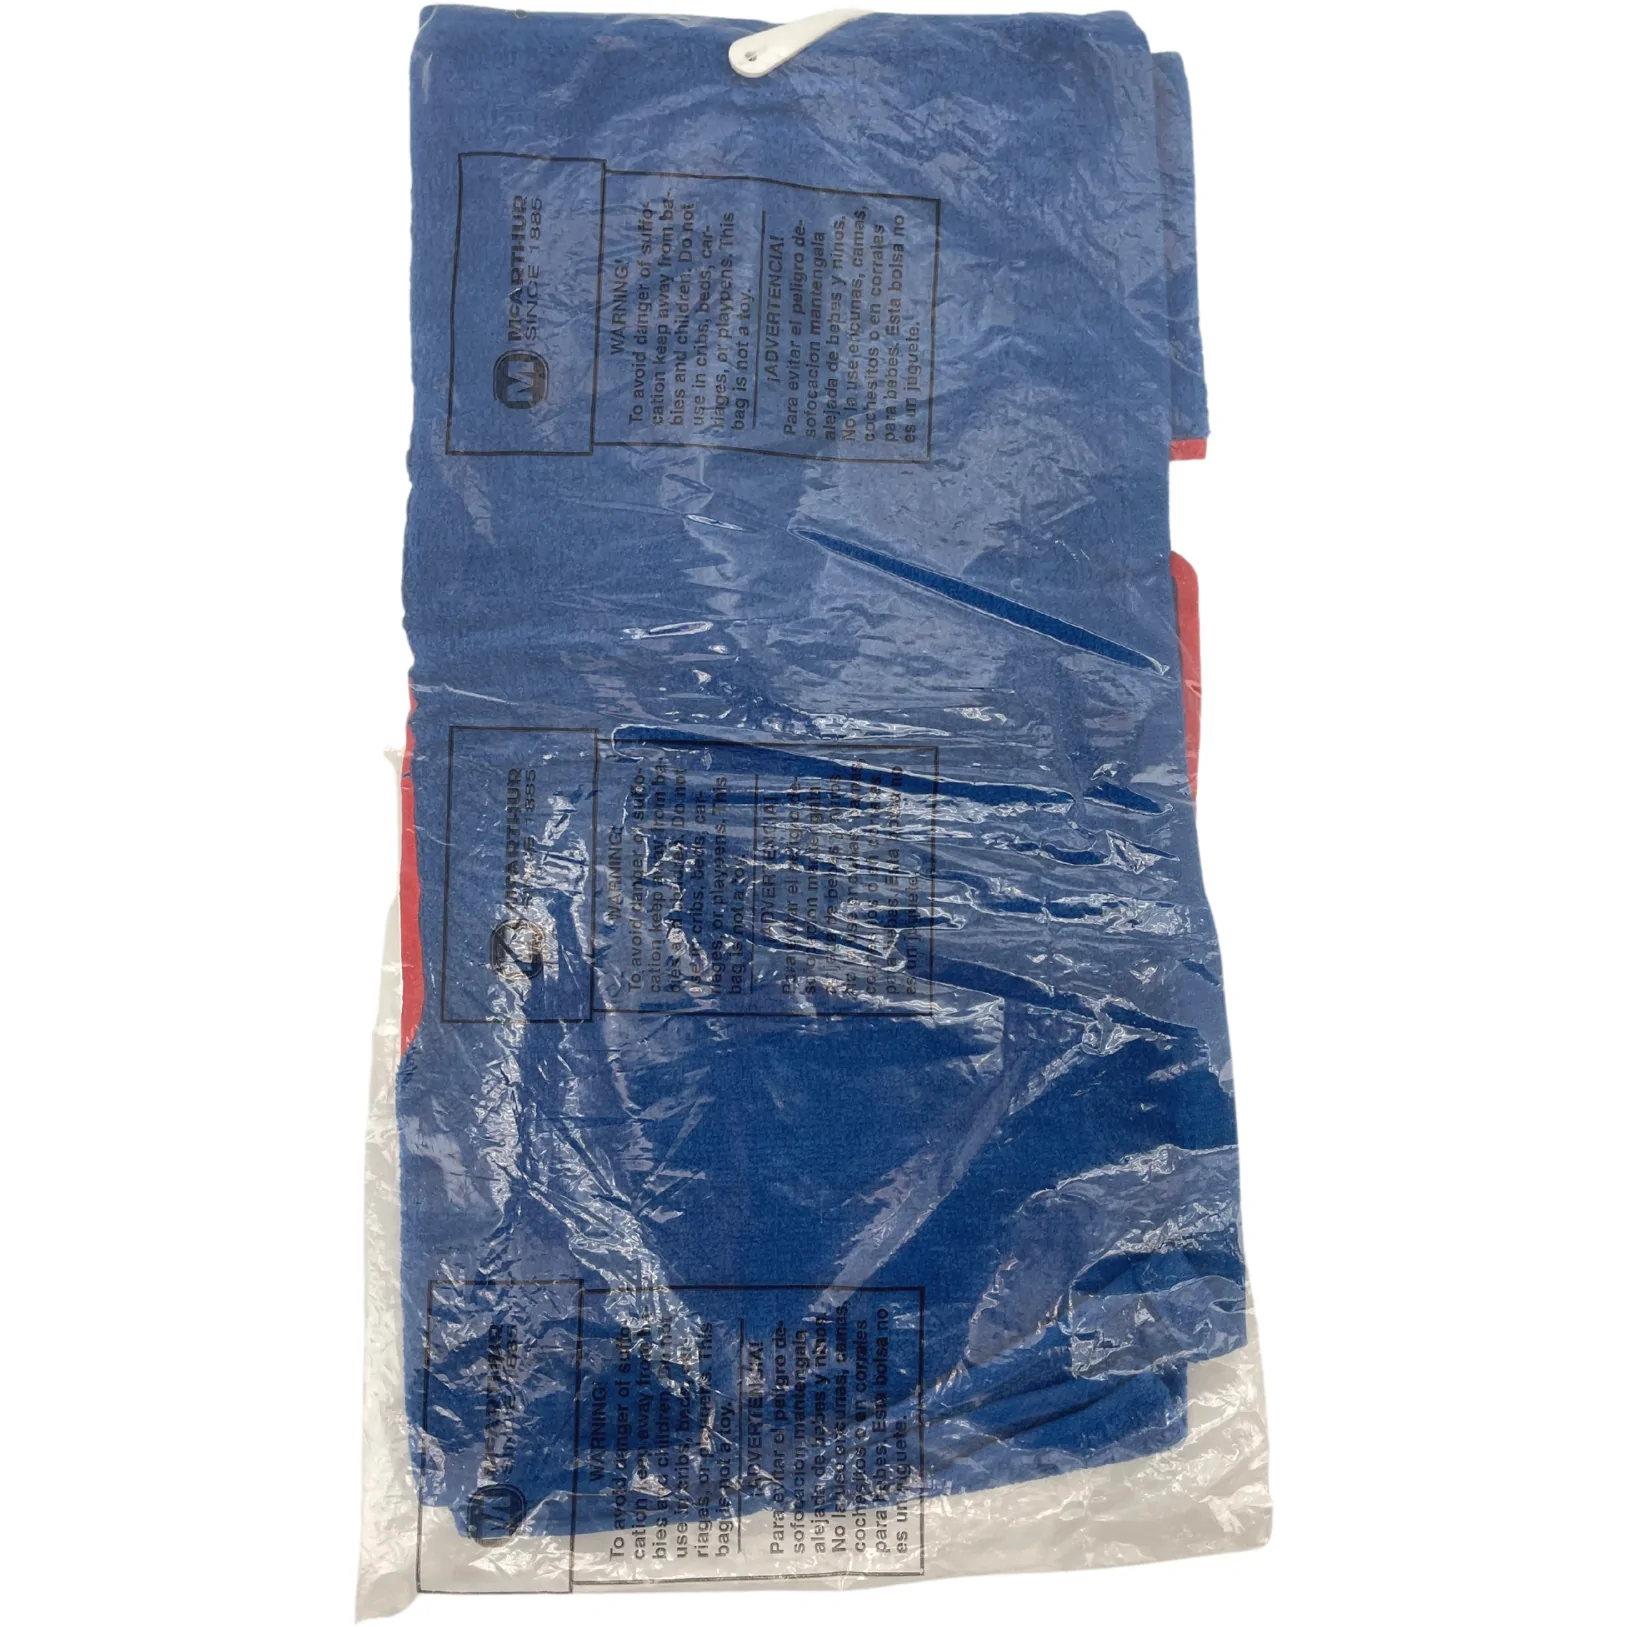 McArthur NFL Sports Towel / New York Giants / Blue, White & Red / Fan Towel